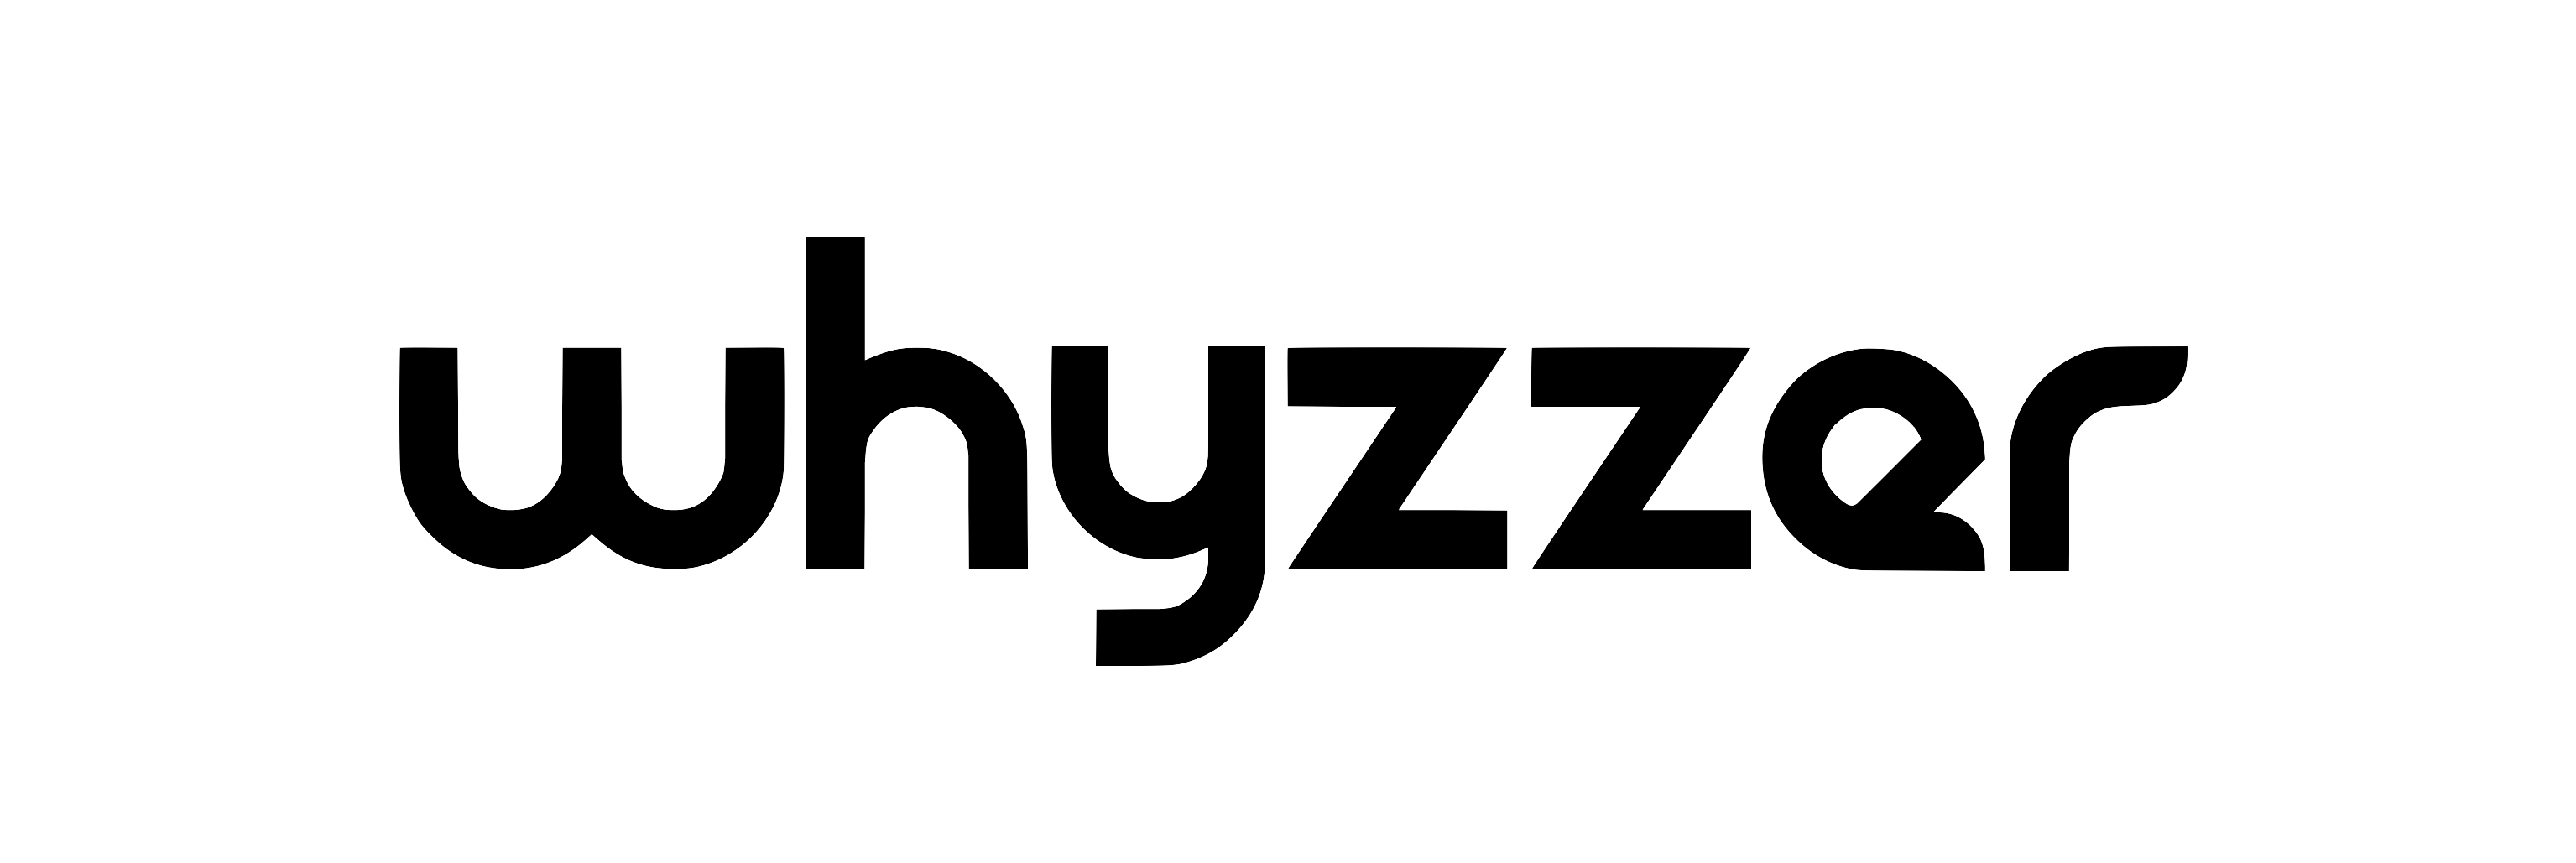 Logo_Whyzzer_black